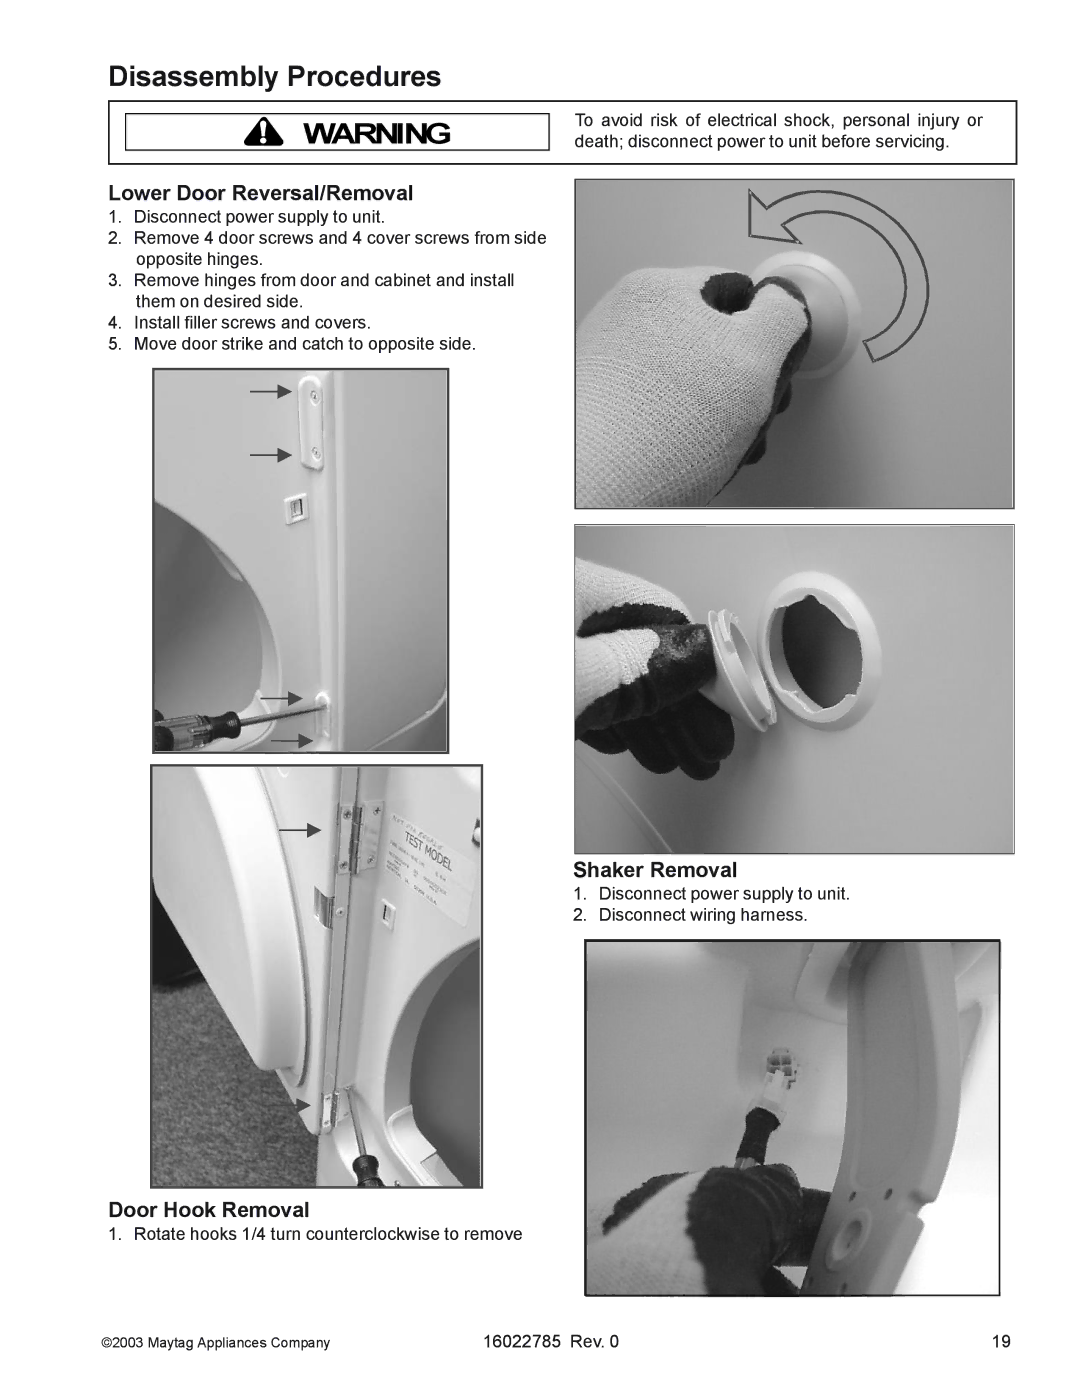 Maytag MCE8000AY manual Lower Door Reversal/Removal, Shaker Removal, Door Hook Removal 